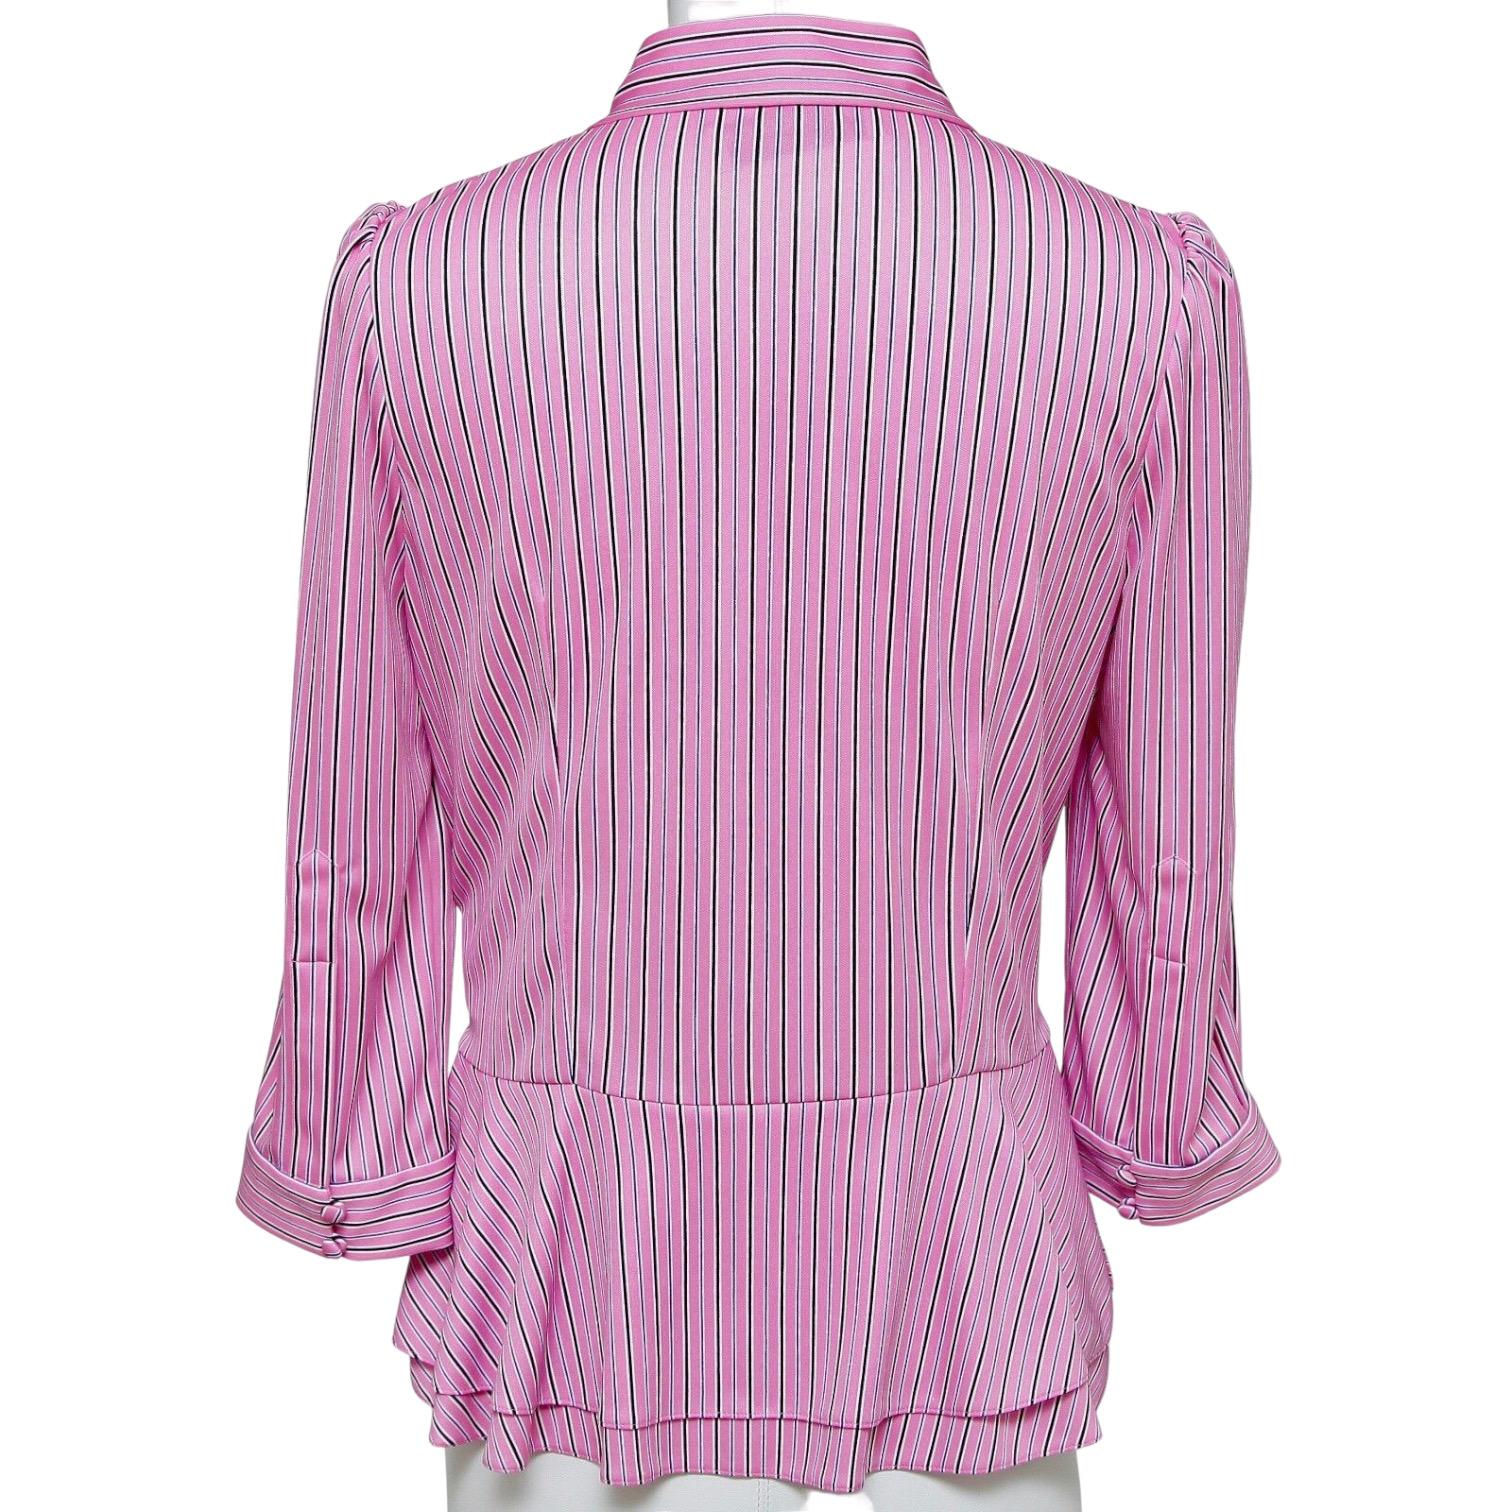 BALENCIAGA Striped Top Shirt Blouse 3/4 Sleeve Neck Tie Rose White Black 38 NWT For Sale 5